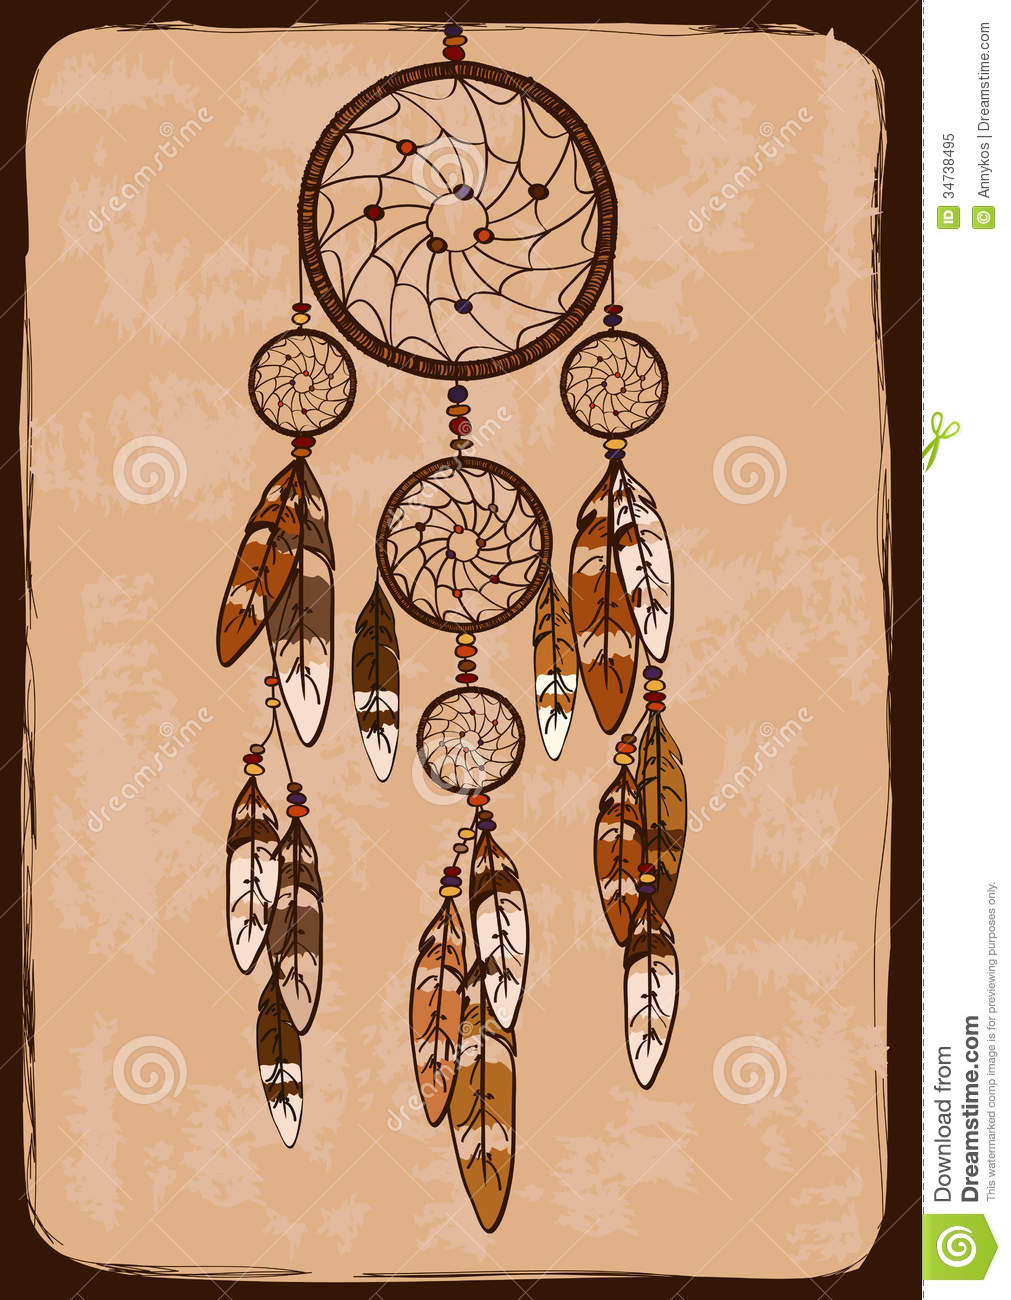 Native American Dreamcatcher Wallpaper Tribal native american